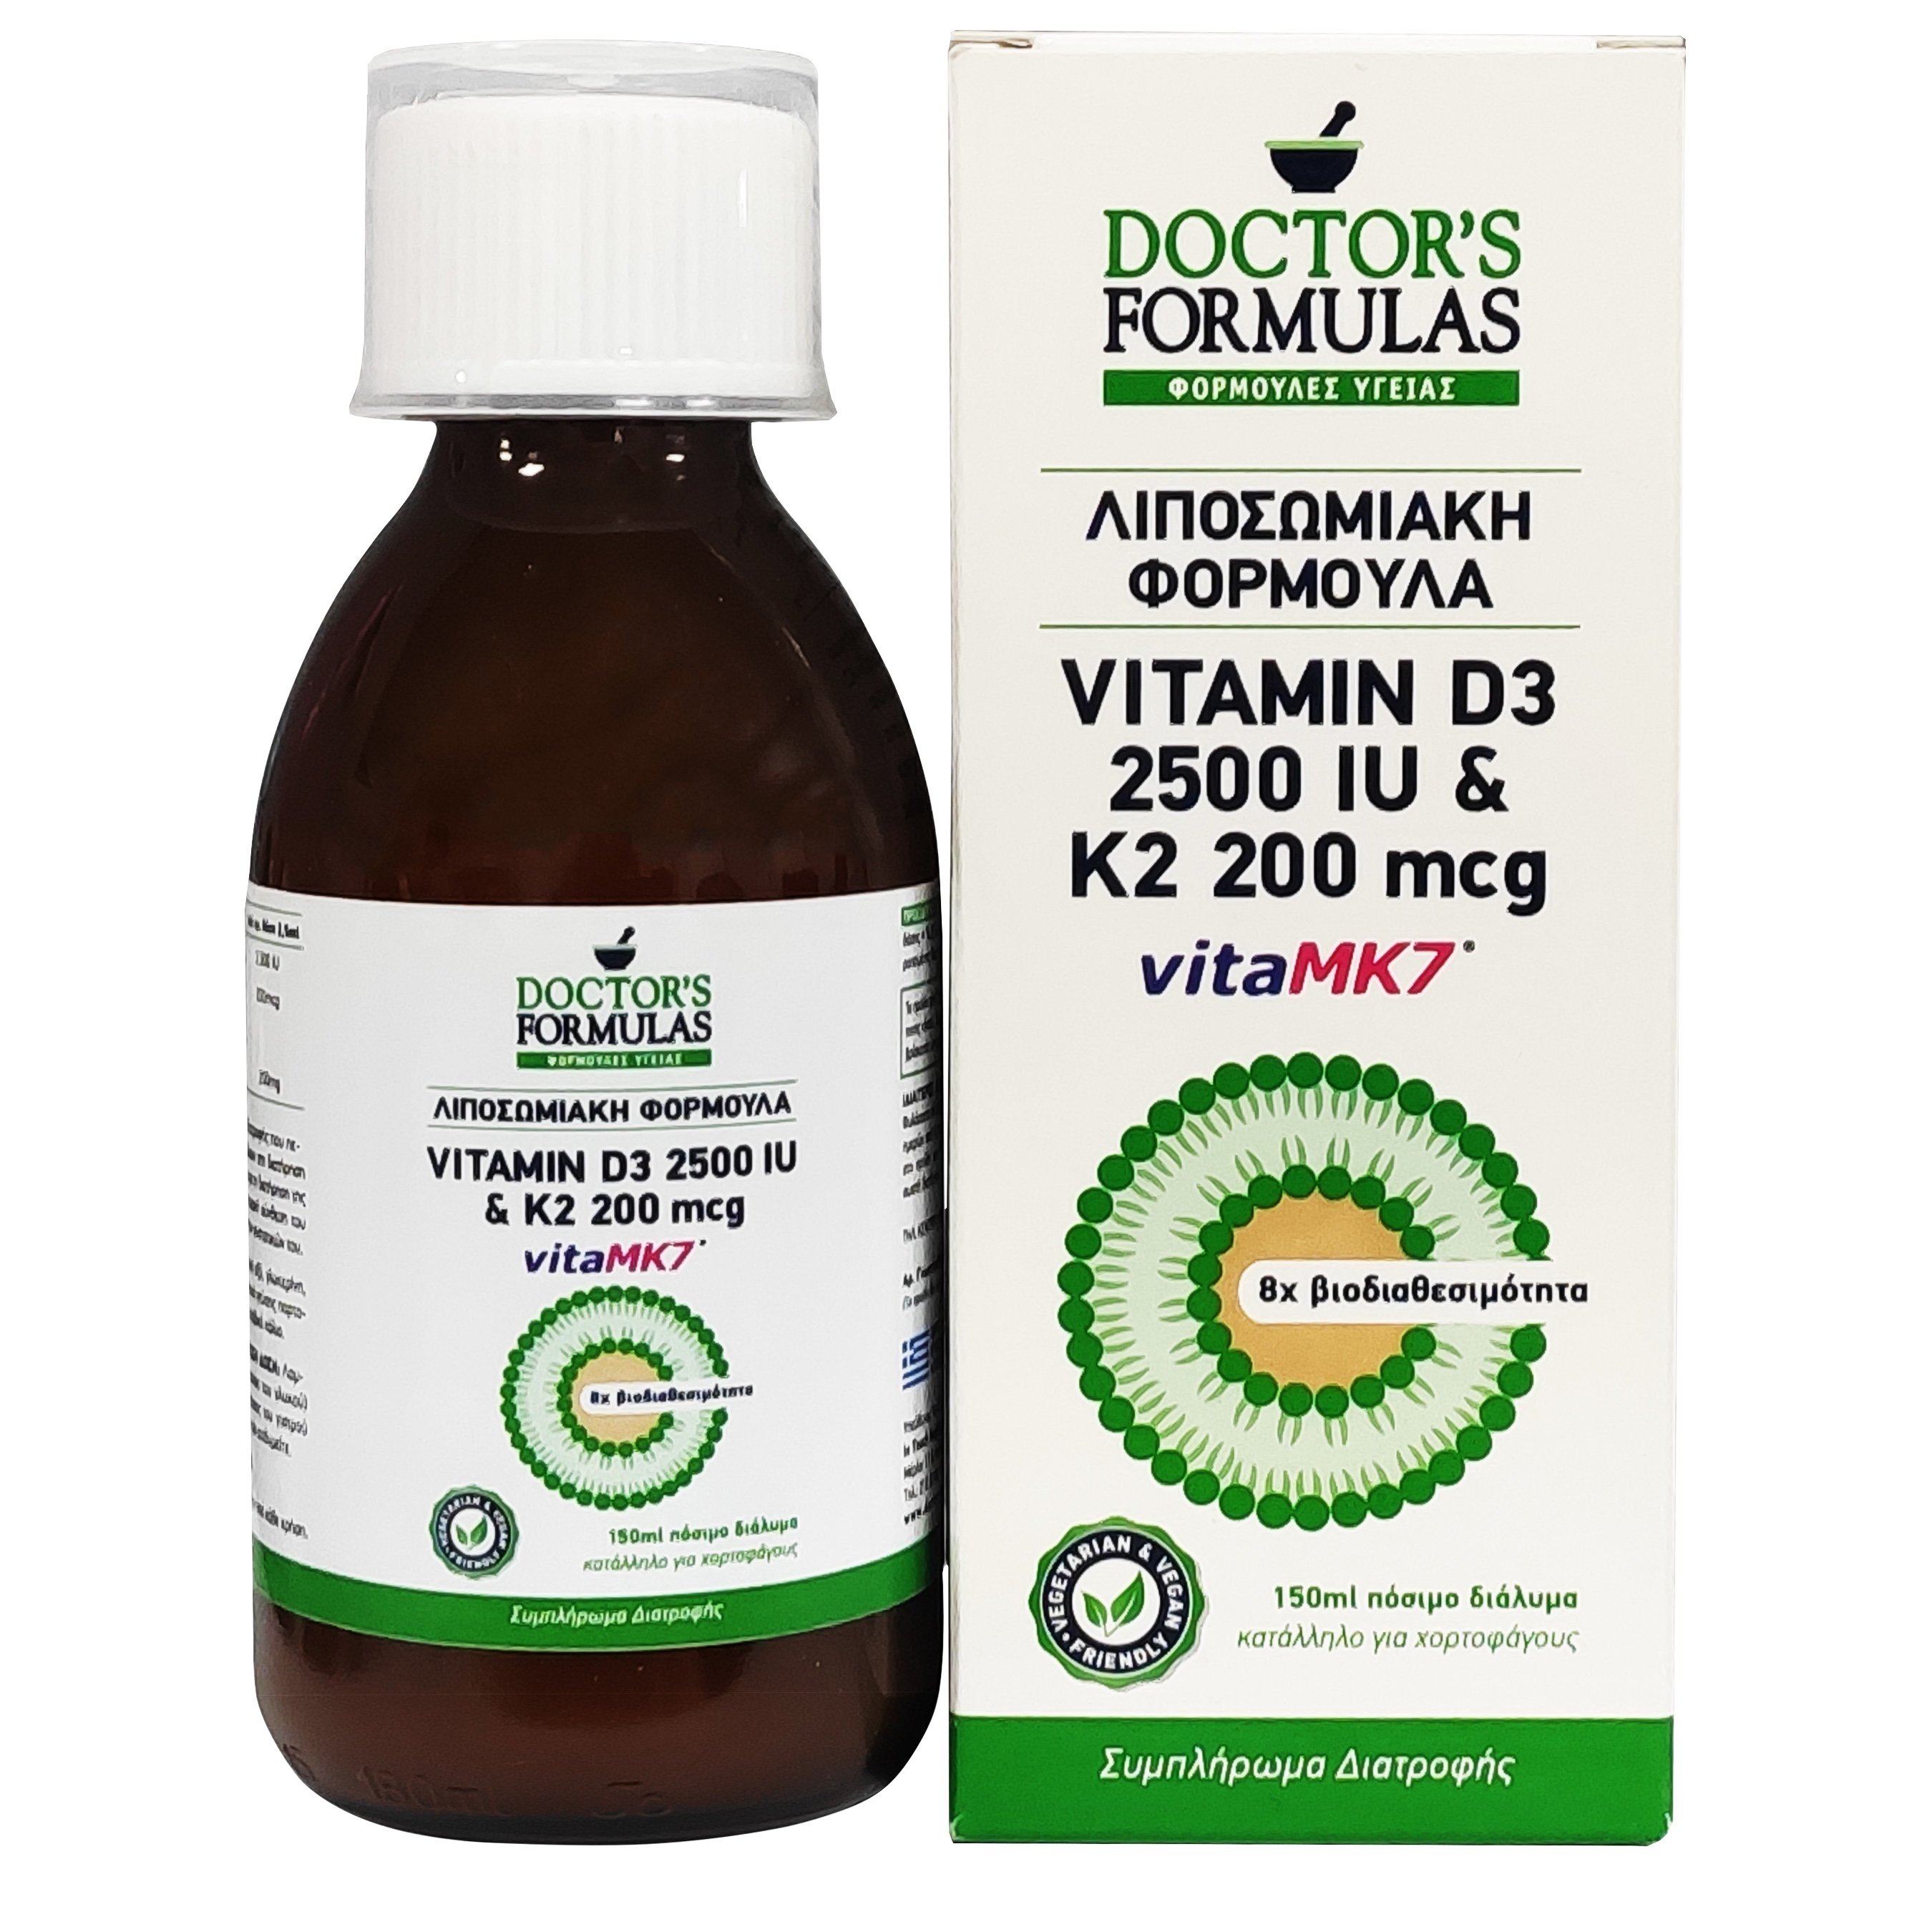 Doctor’s Formulas Vitamin D3 2500IU & K2 200mcg Λιποσωμιακή Φόρμουλα 150ml